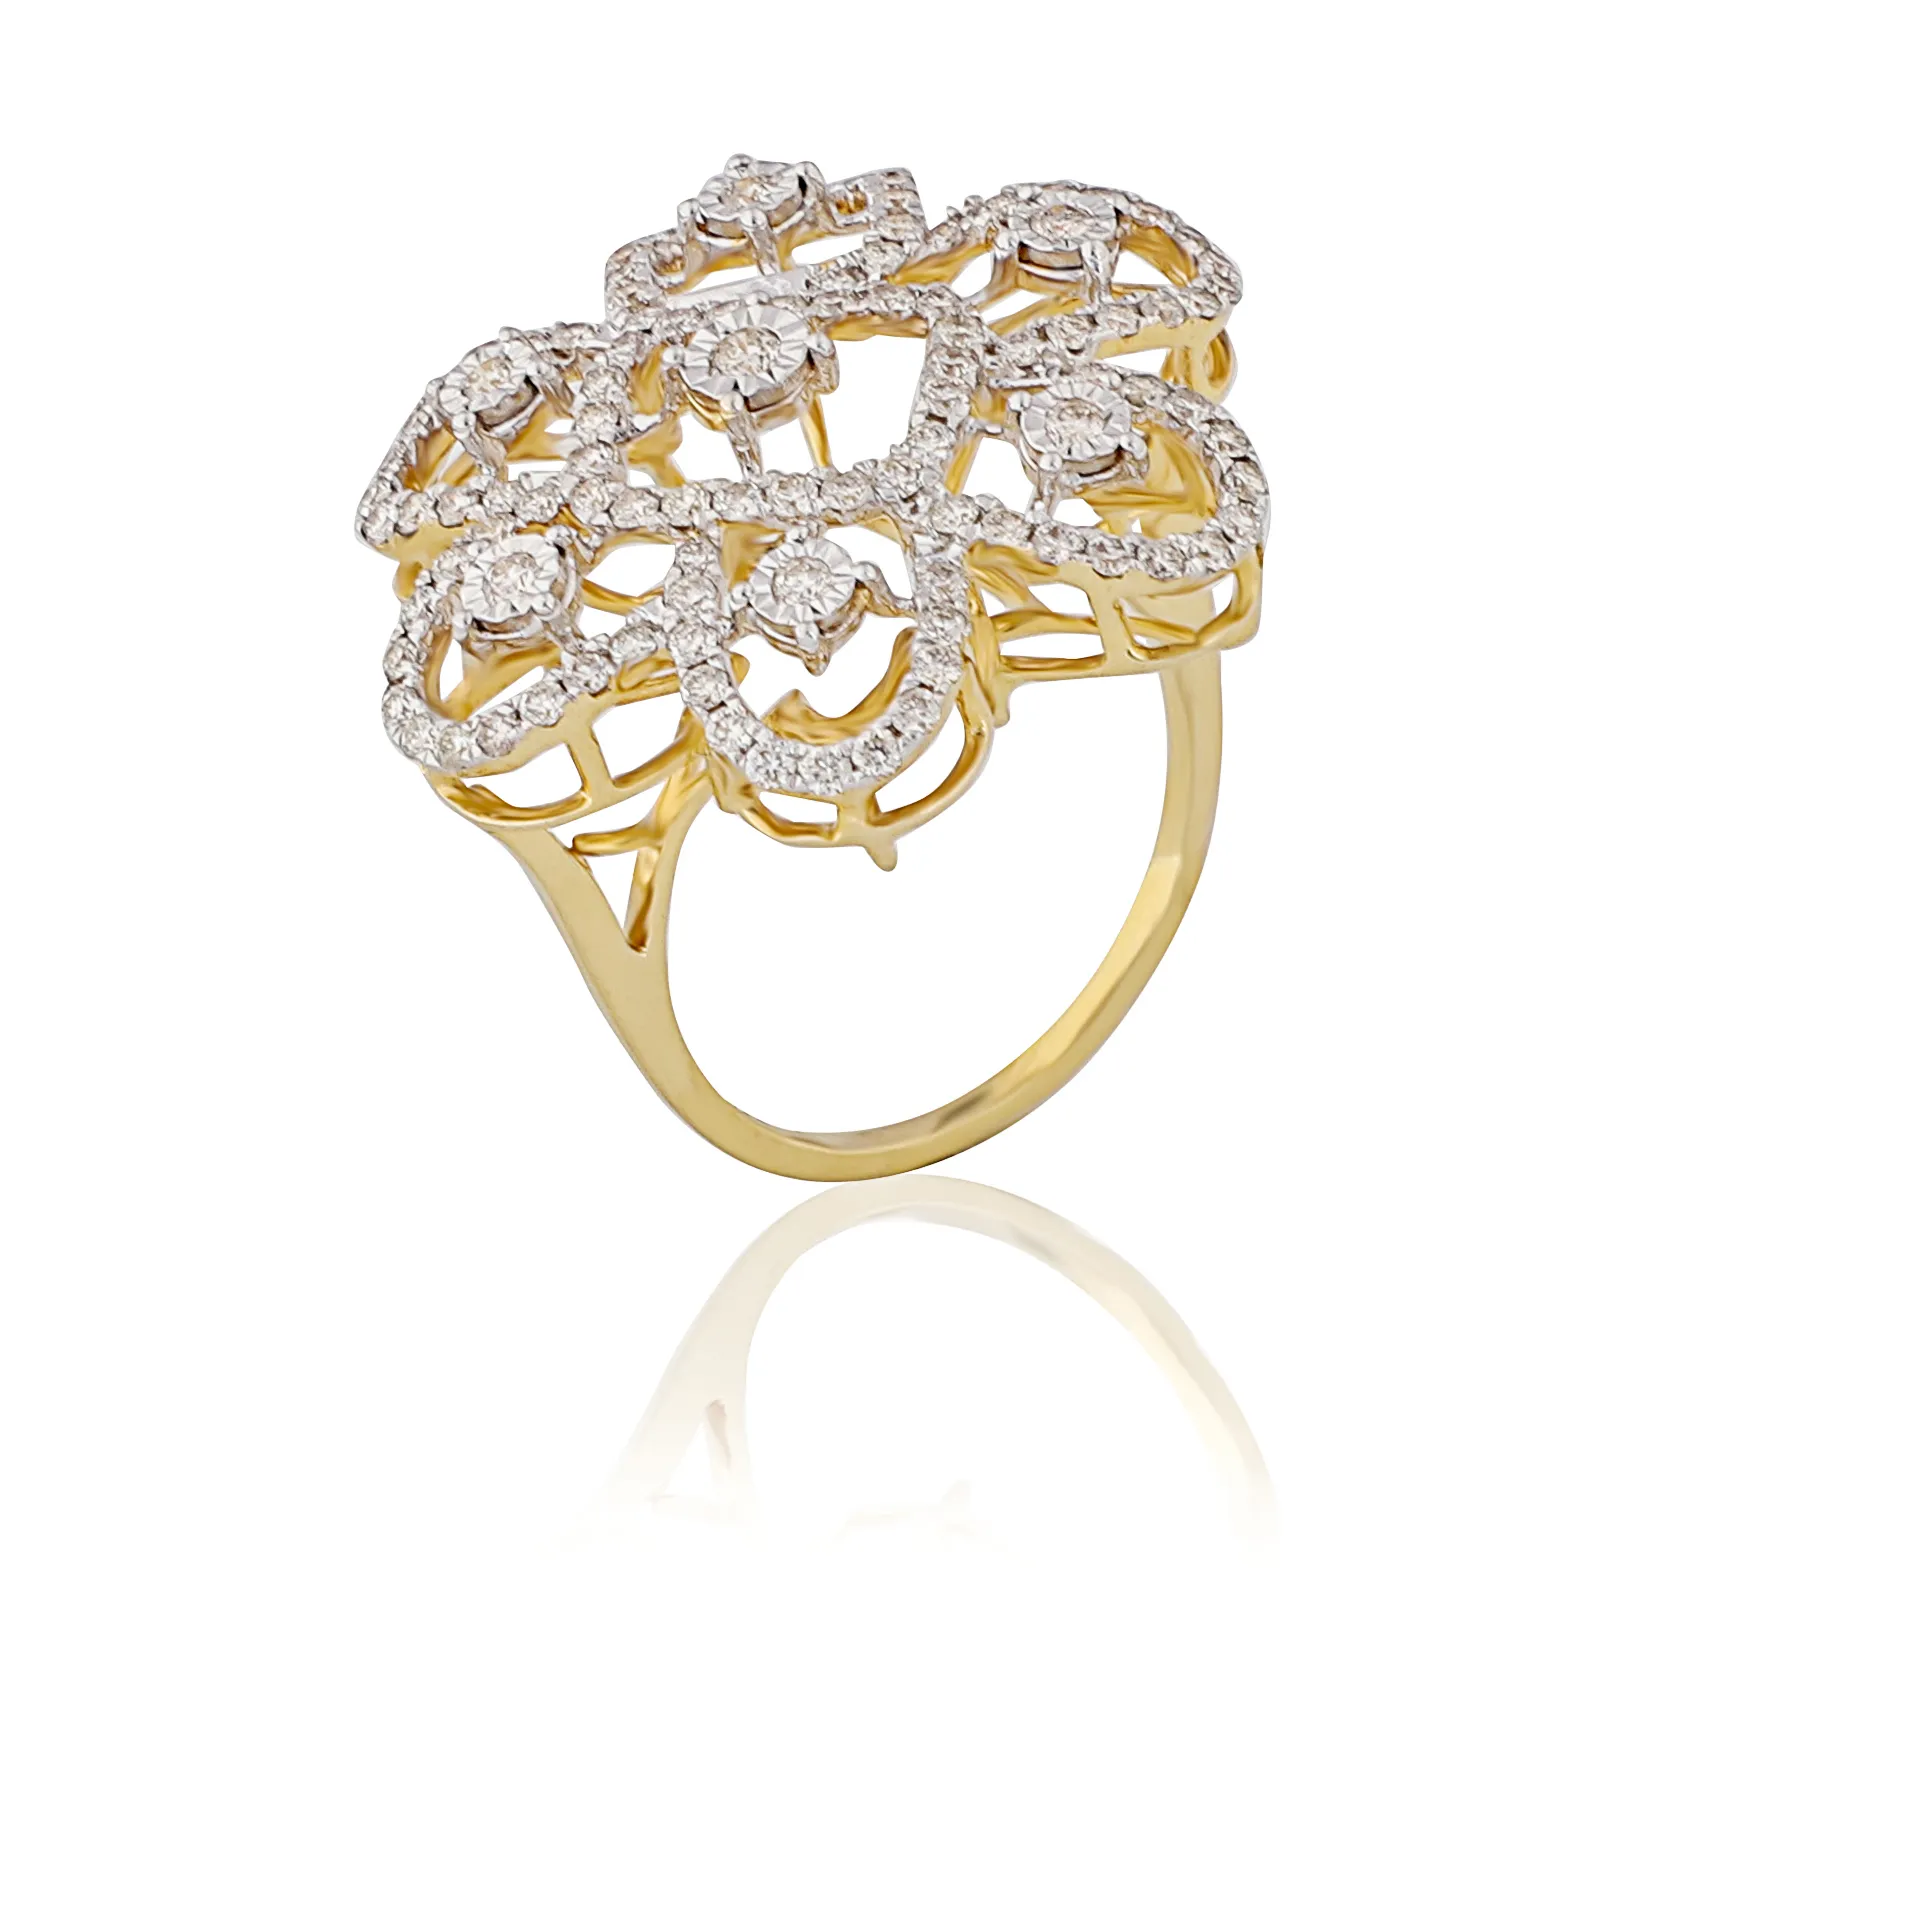 14K Solid Gold Diamond Band Ring, 0.11 Carat G-H White Diamond Wedding